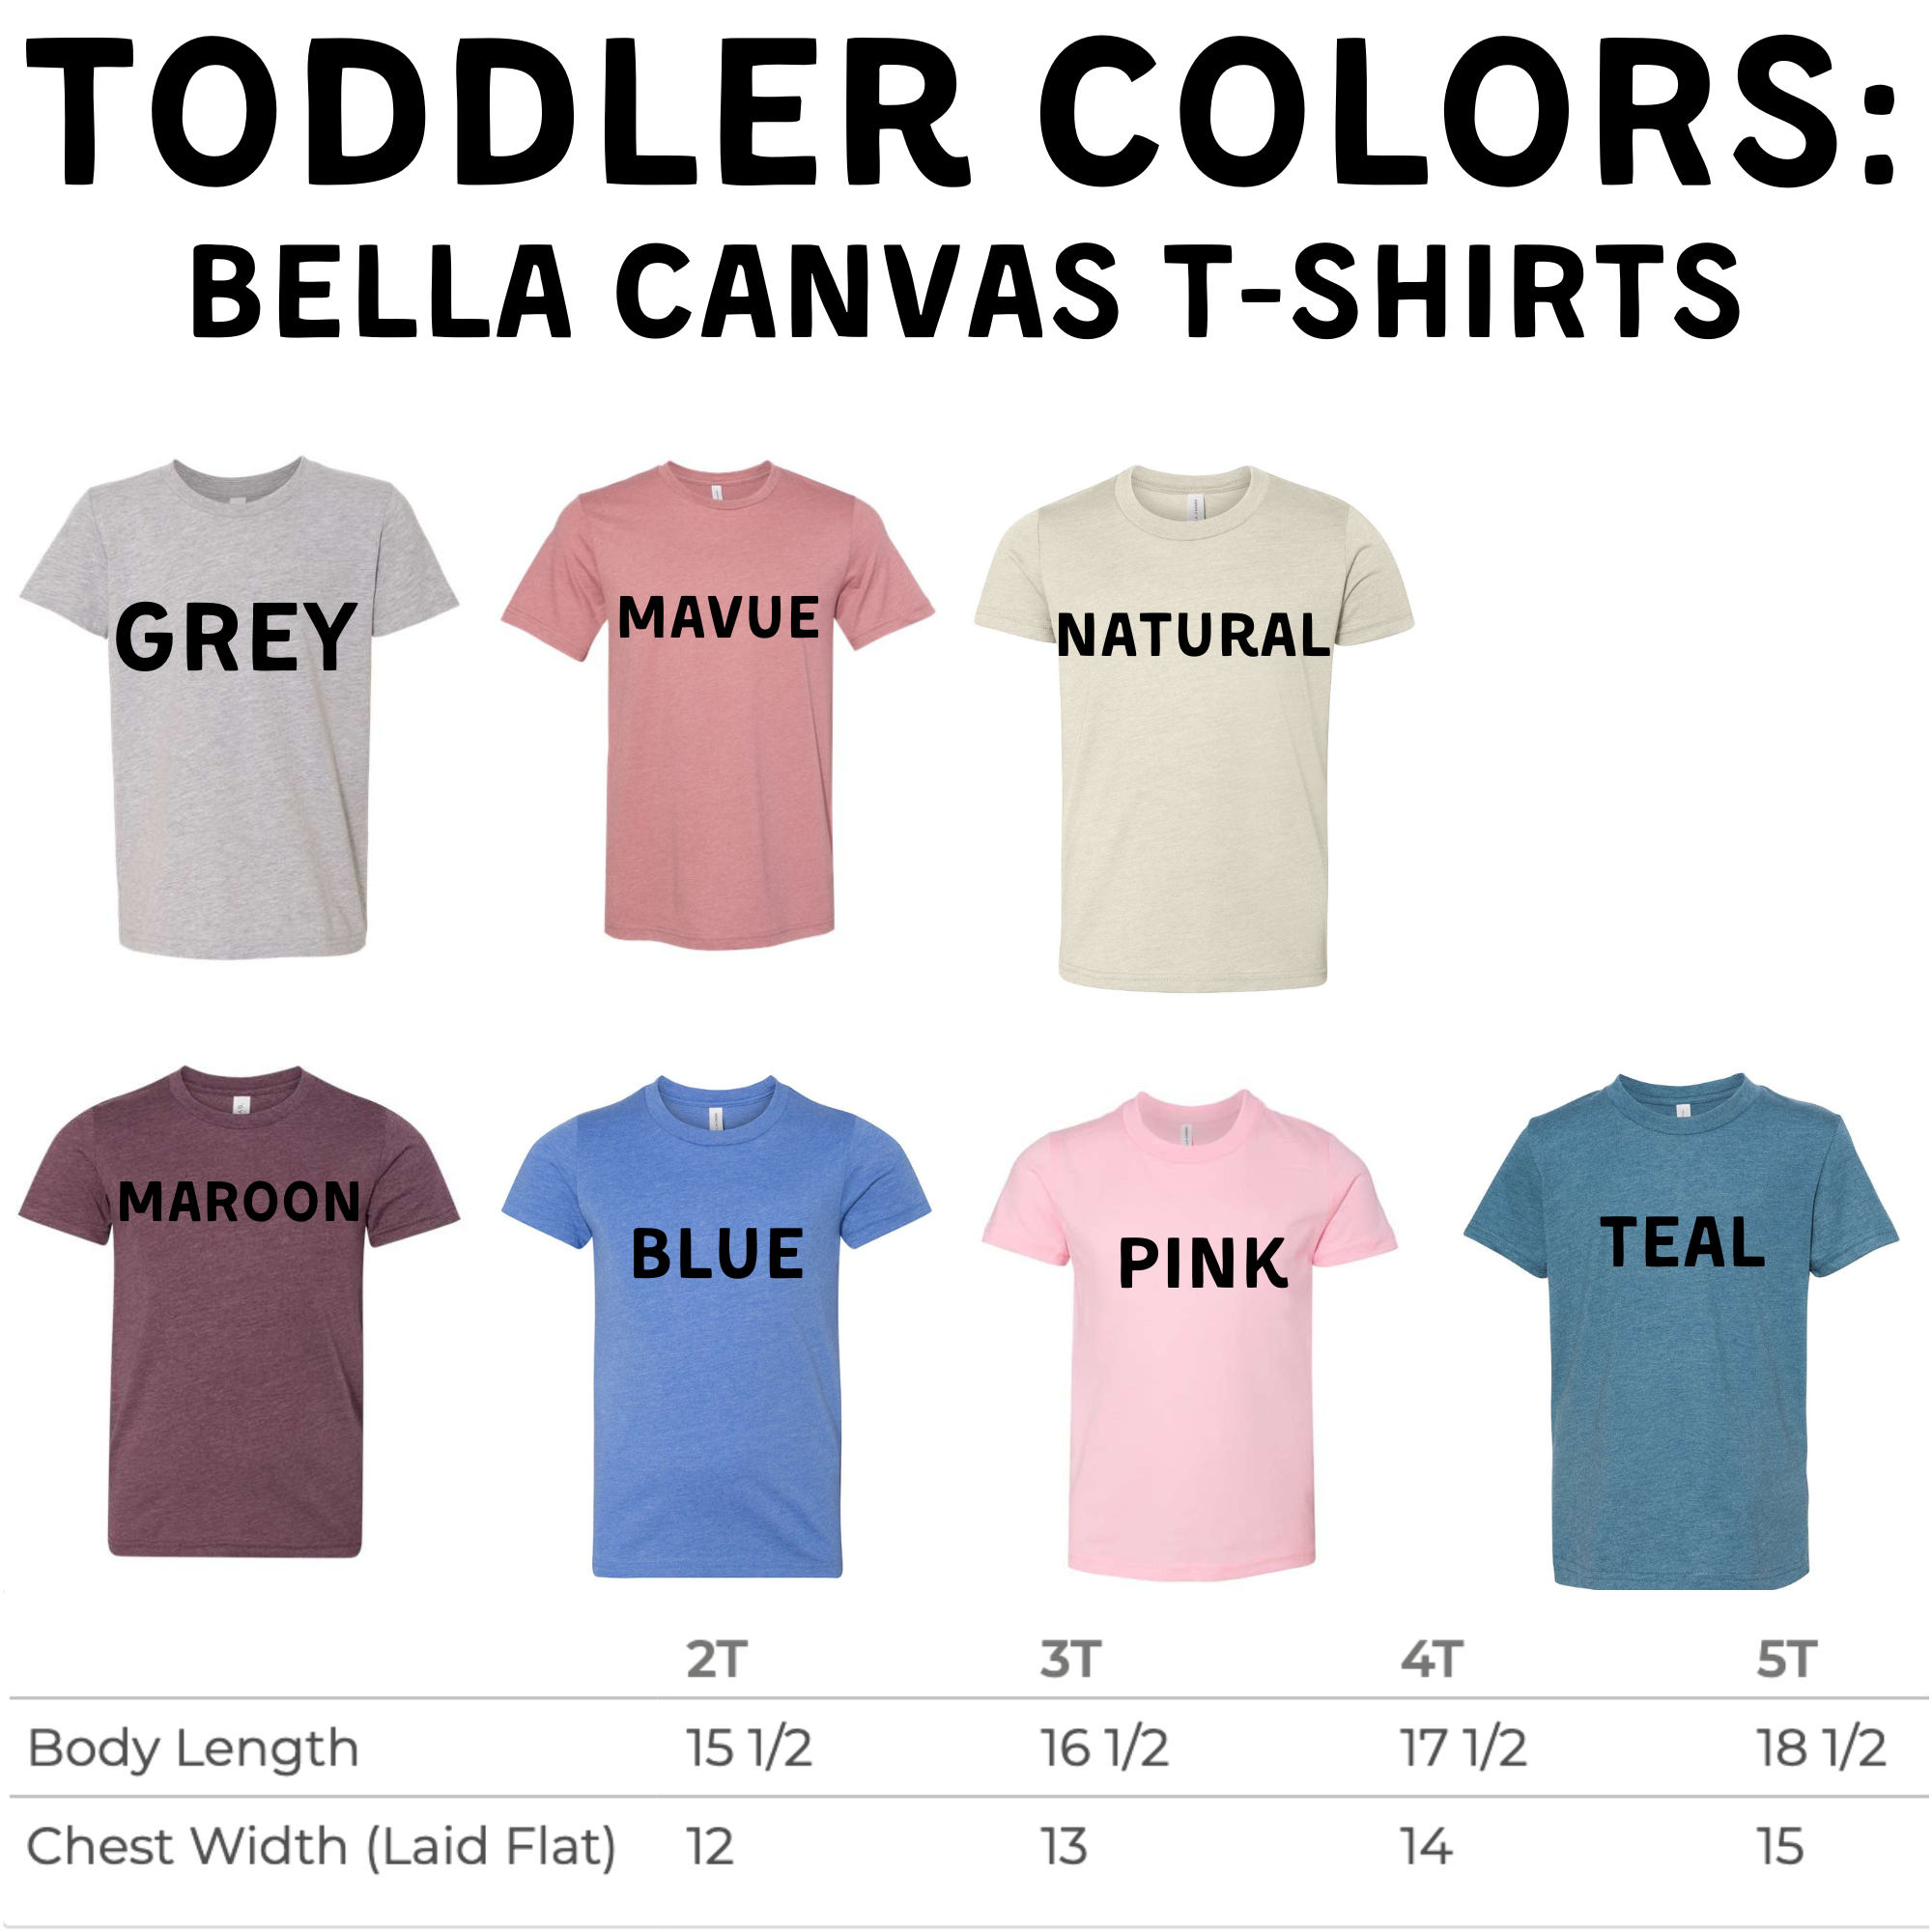 Family Matching Adventure Buddies (TODDLER SHIRT ONLY)-Baby & Toddler-208 Tees Wholesale, Idaho